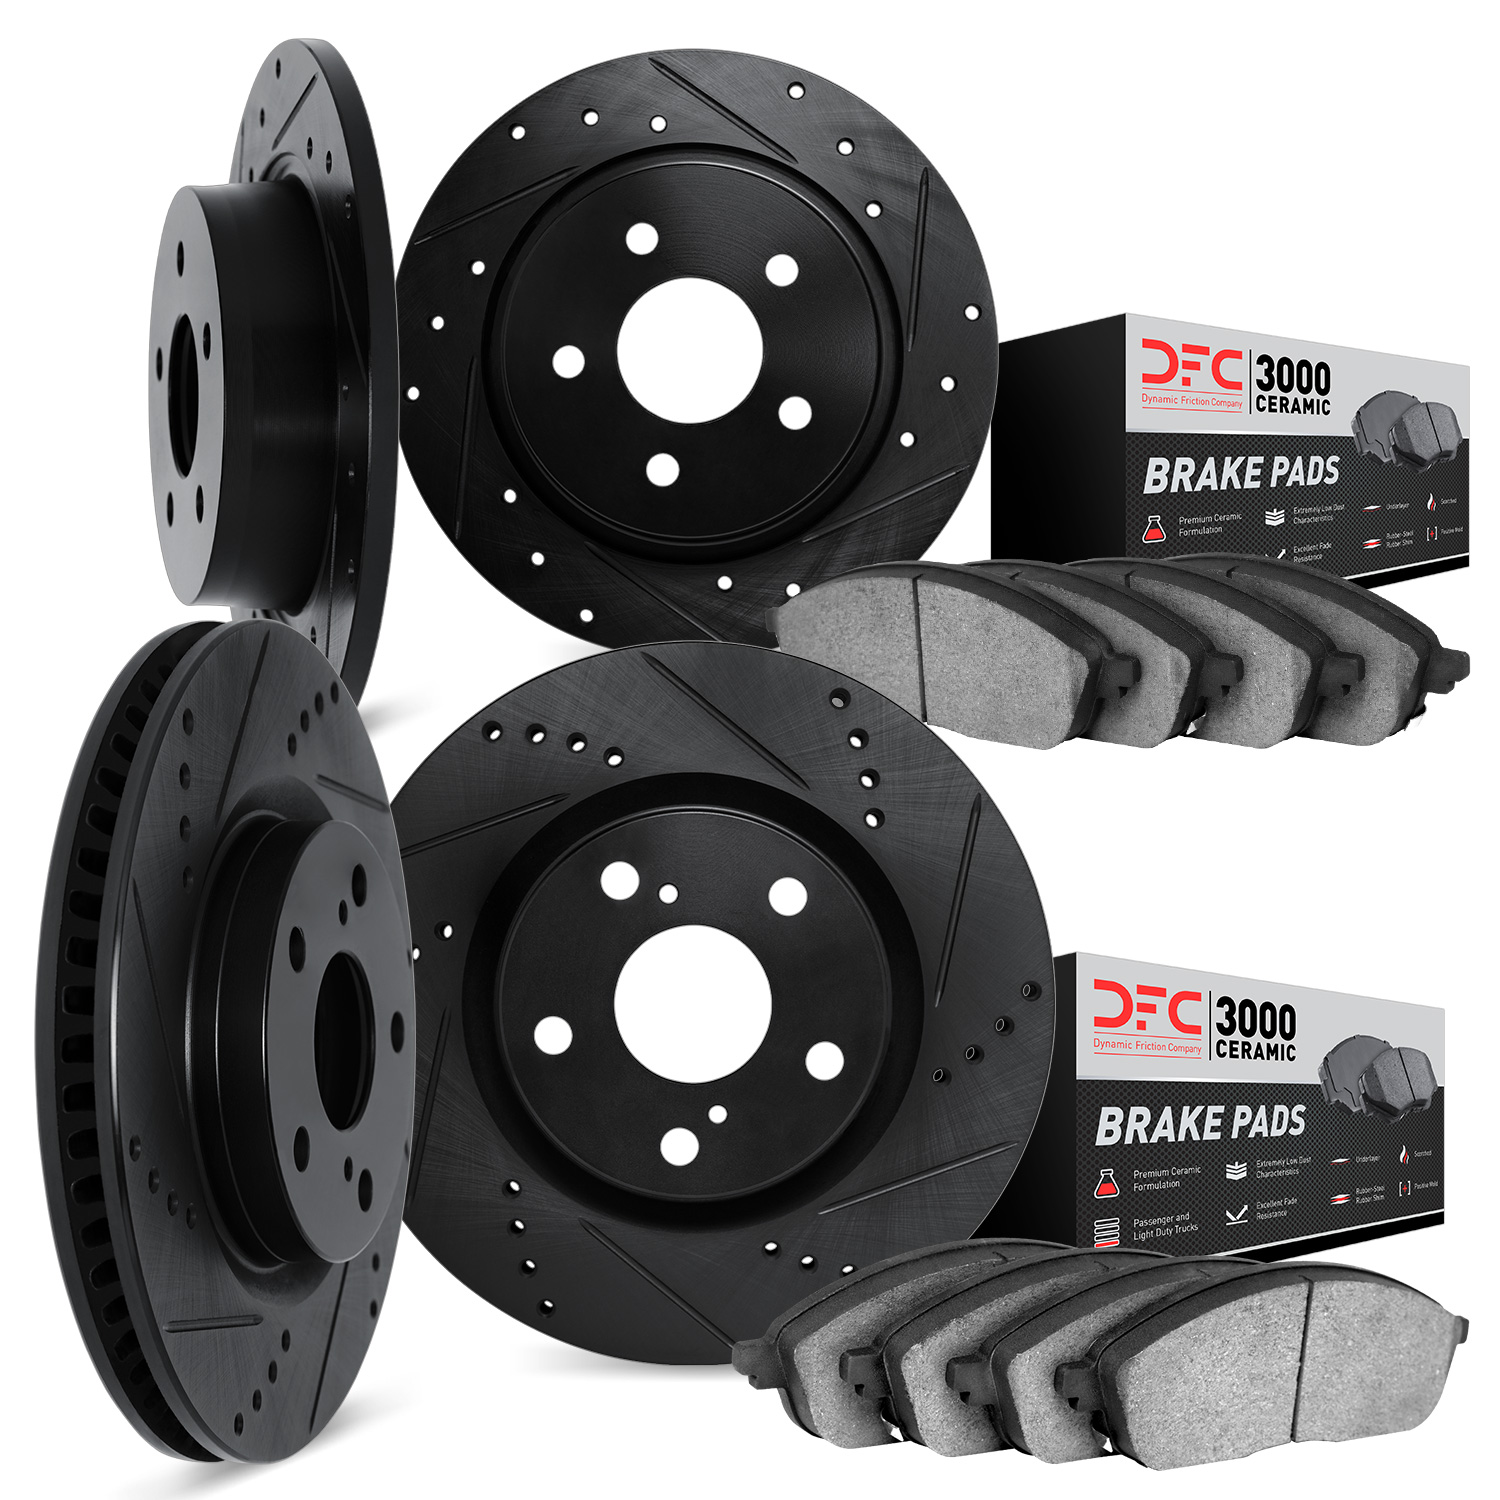 8304-80044 Drilled/Slotted Brake Rotors with 3000-Series Ceramic Brake Pads Kit [Black], 2014-2016 Ford/Lincoln/Mercury/Mazda, P